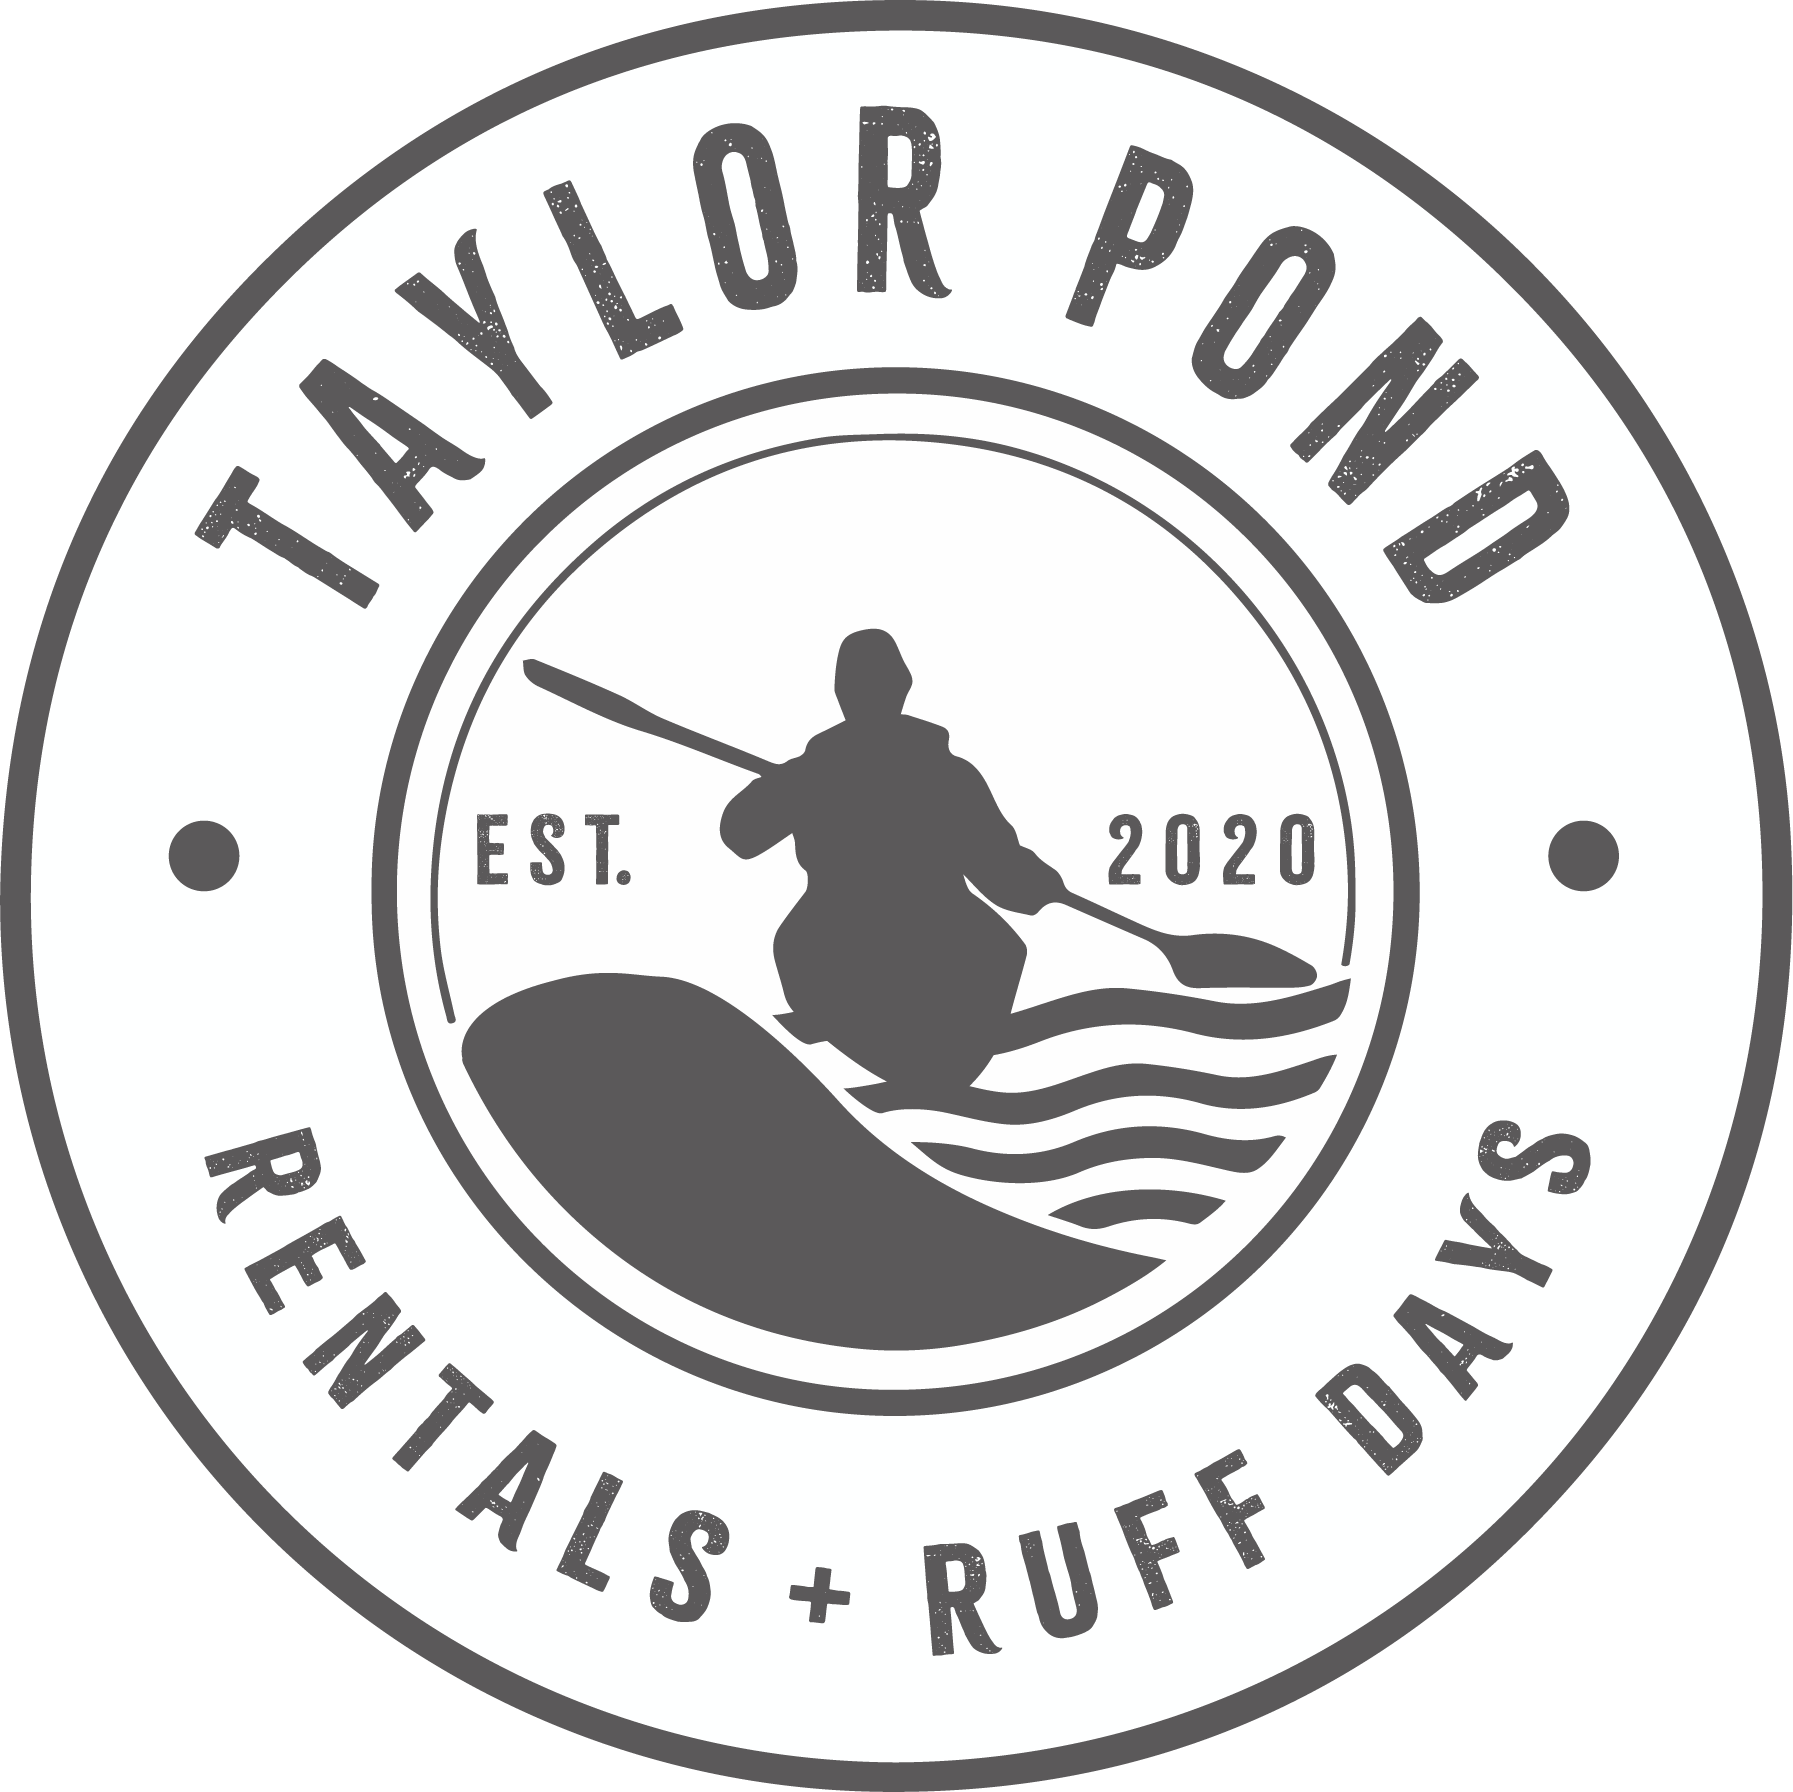 Taylor Pond